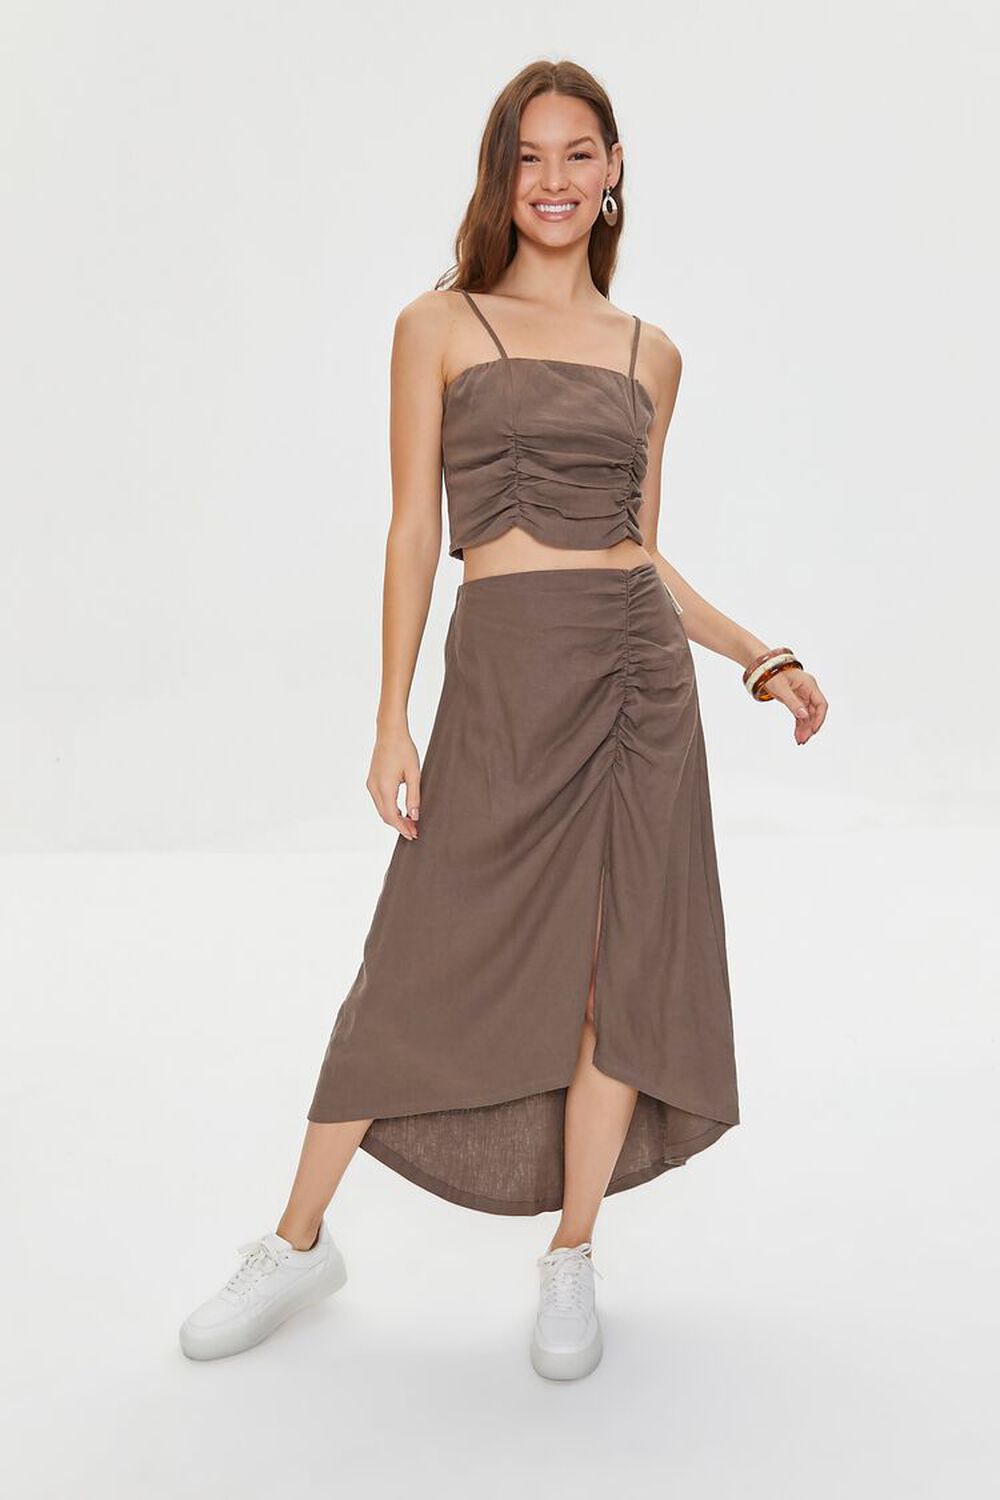 TAUPE Kendall + Kylie Linen-Blend Skirt, image 1